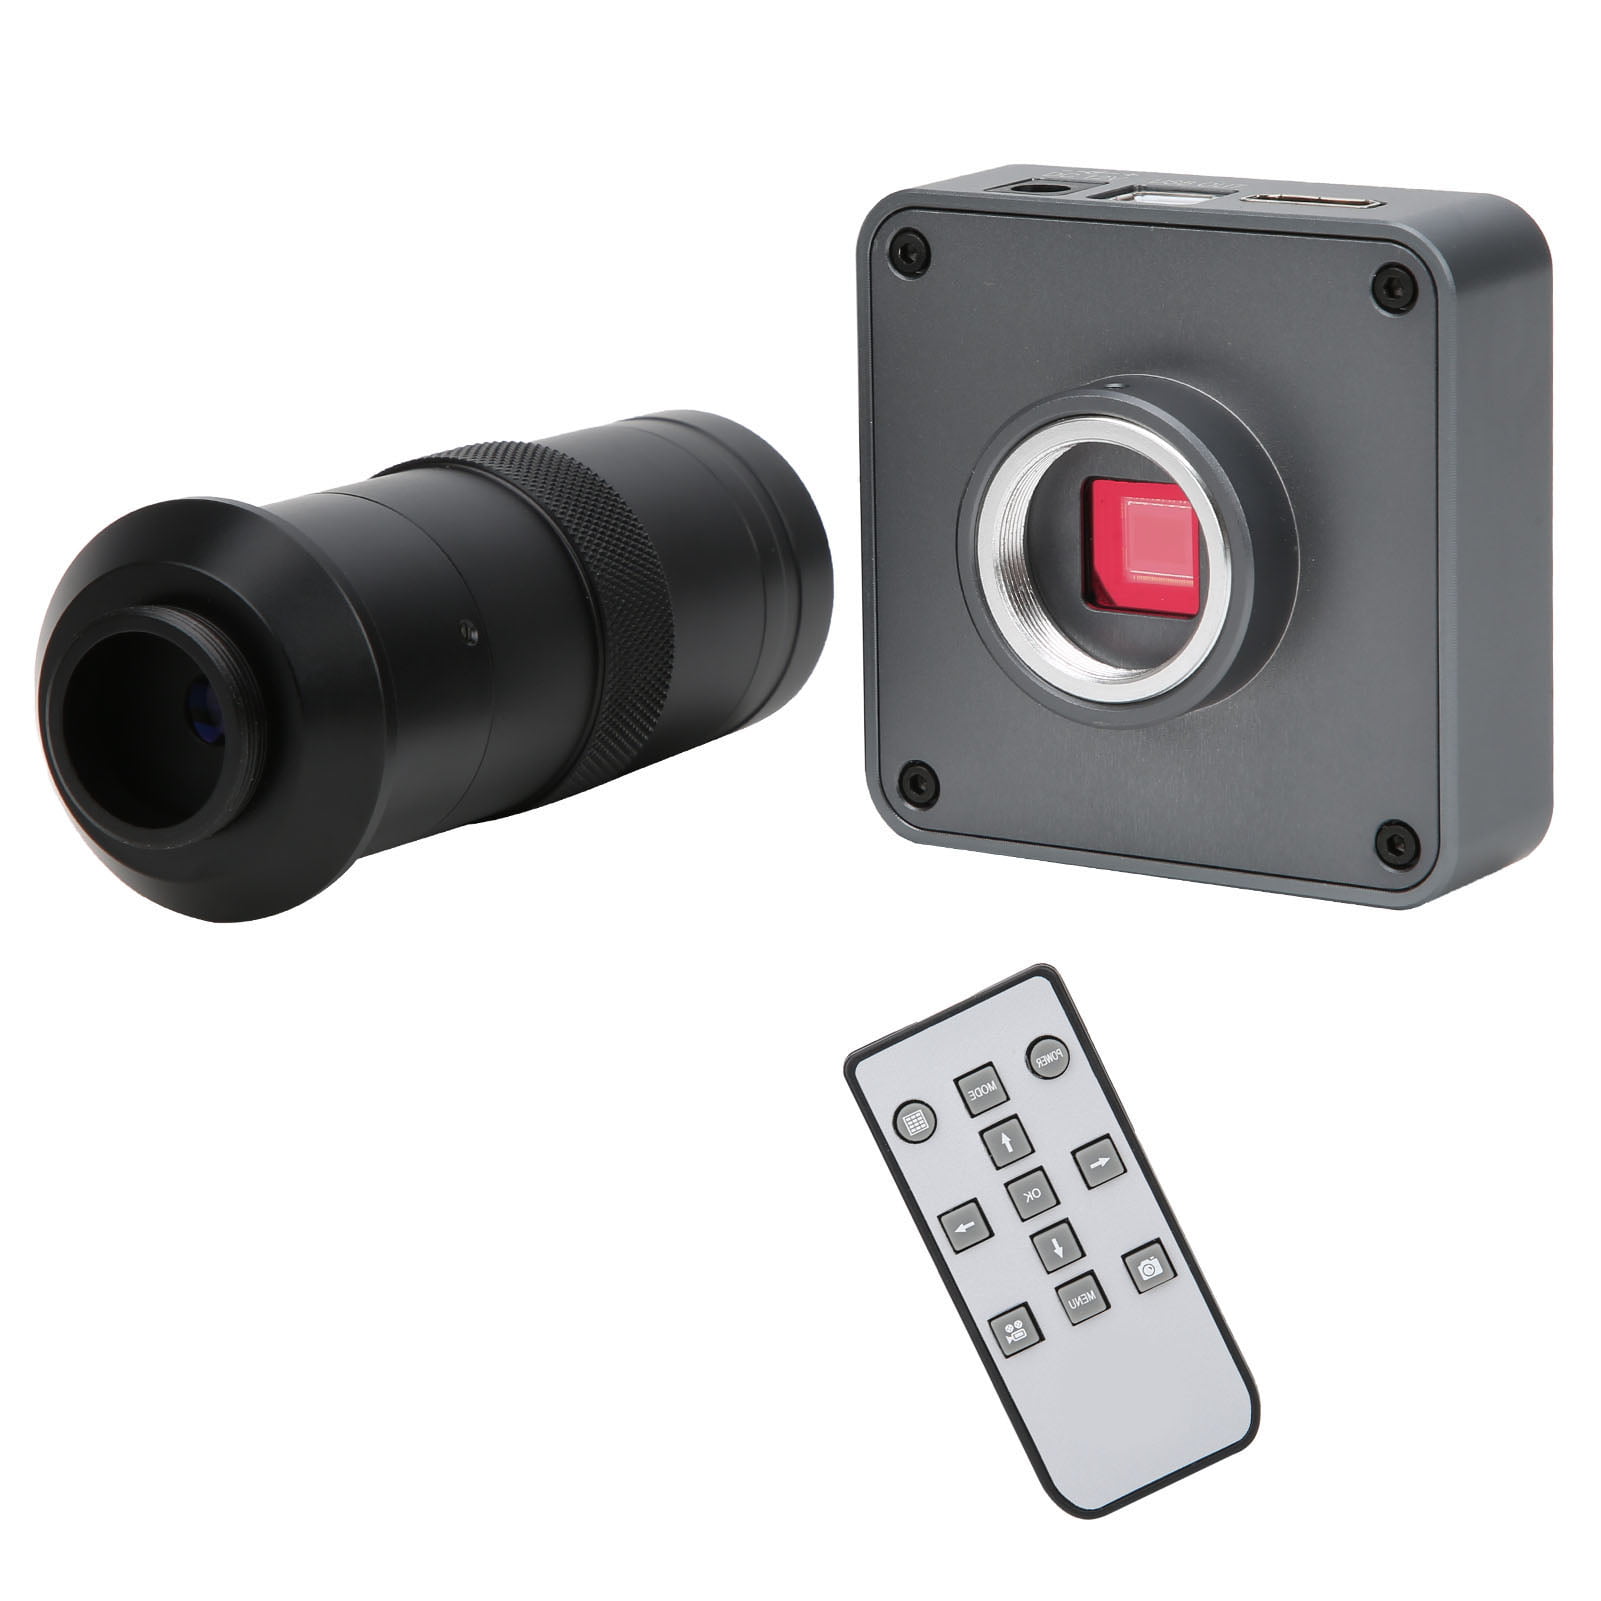 Printing Industrial Camera Lens Ticket Identification Mobile Phone Repair U.S. regulations Microscope Industrial Camera High-Definition for Fingerprint Identification 